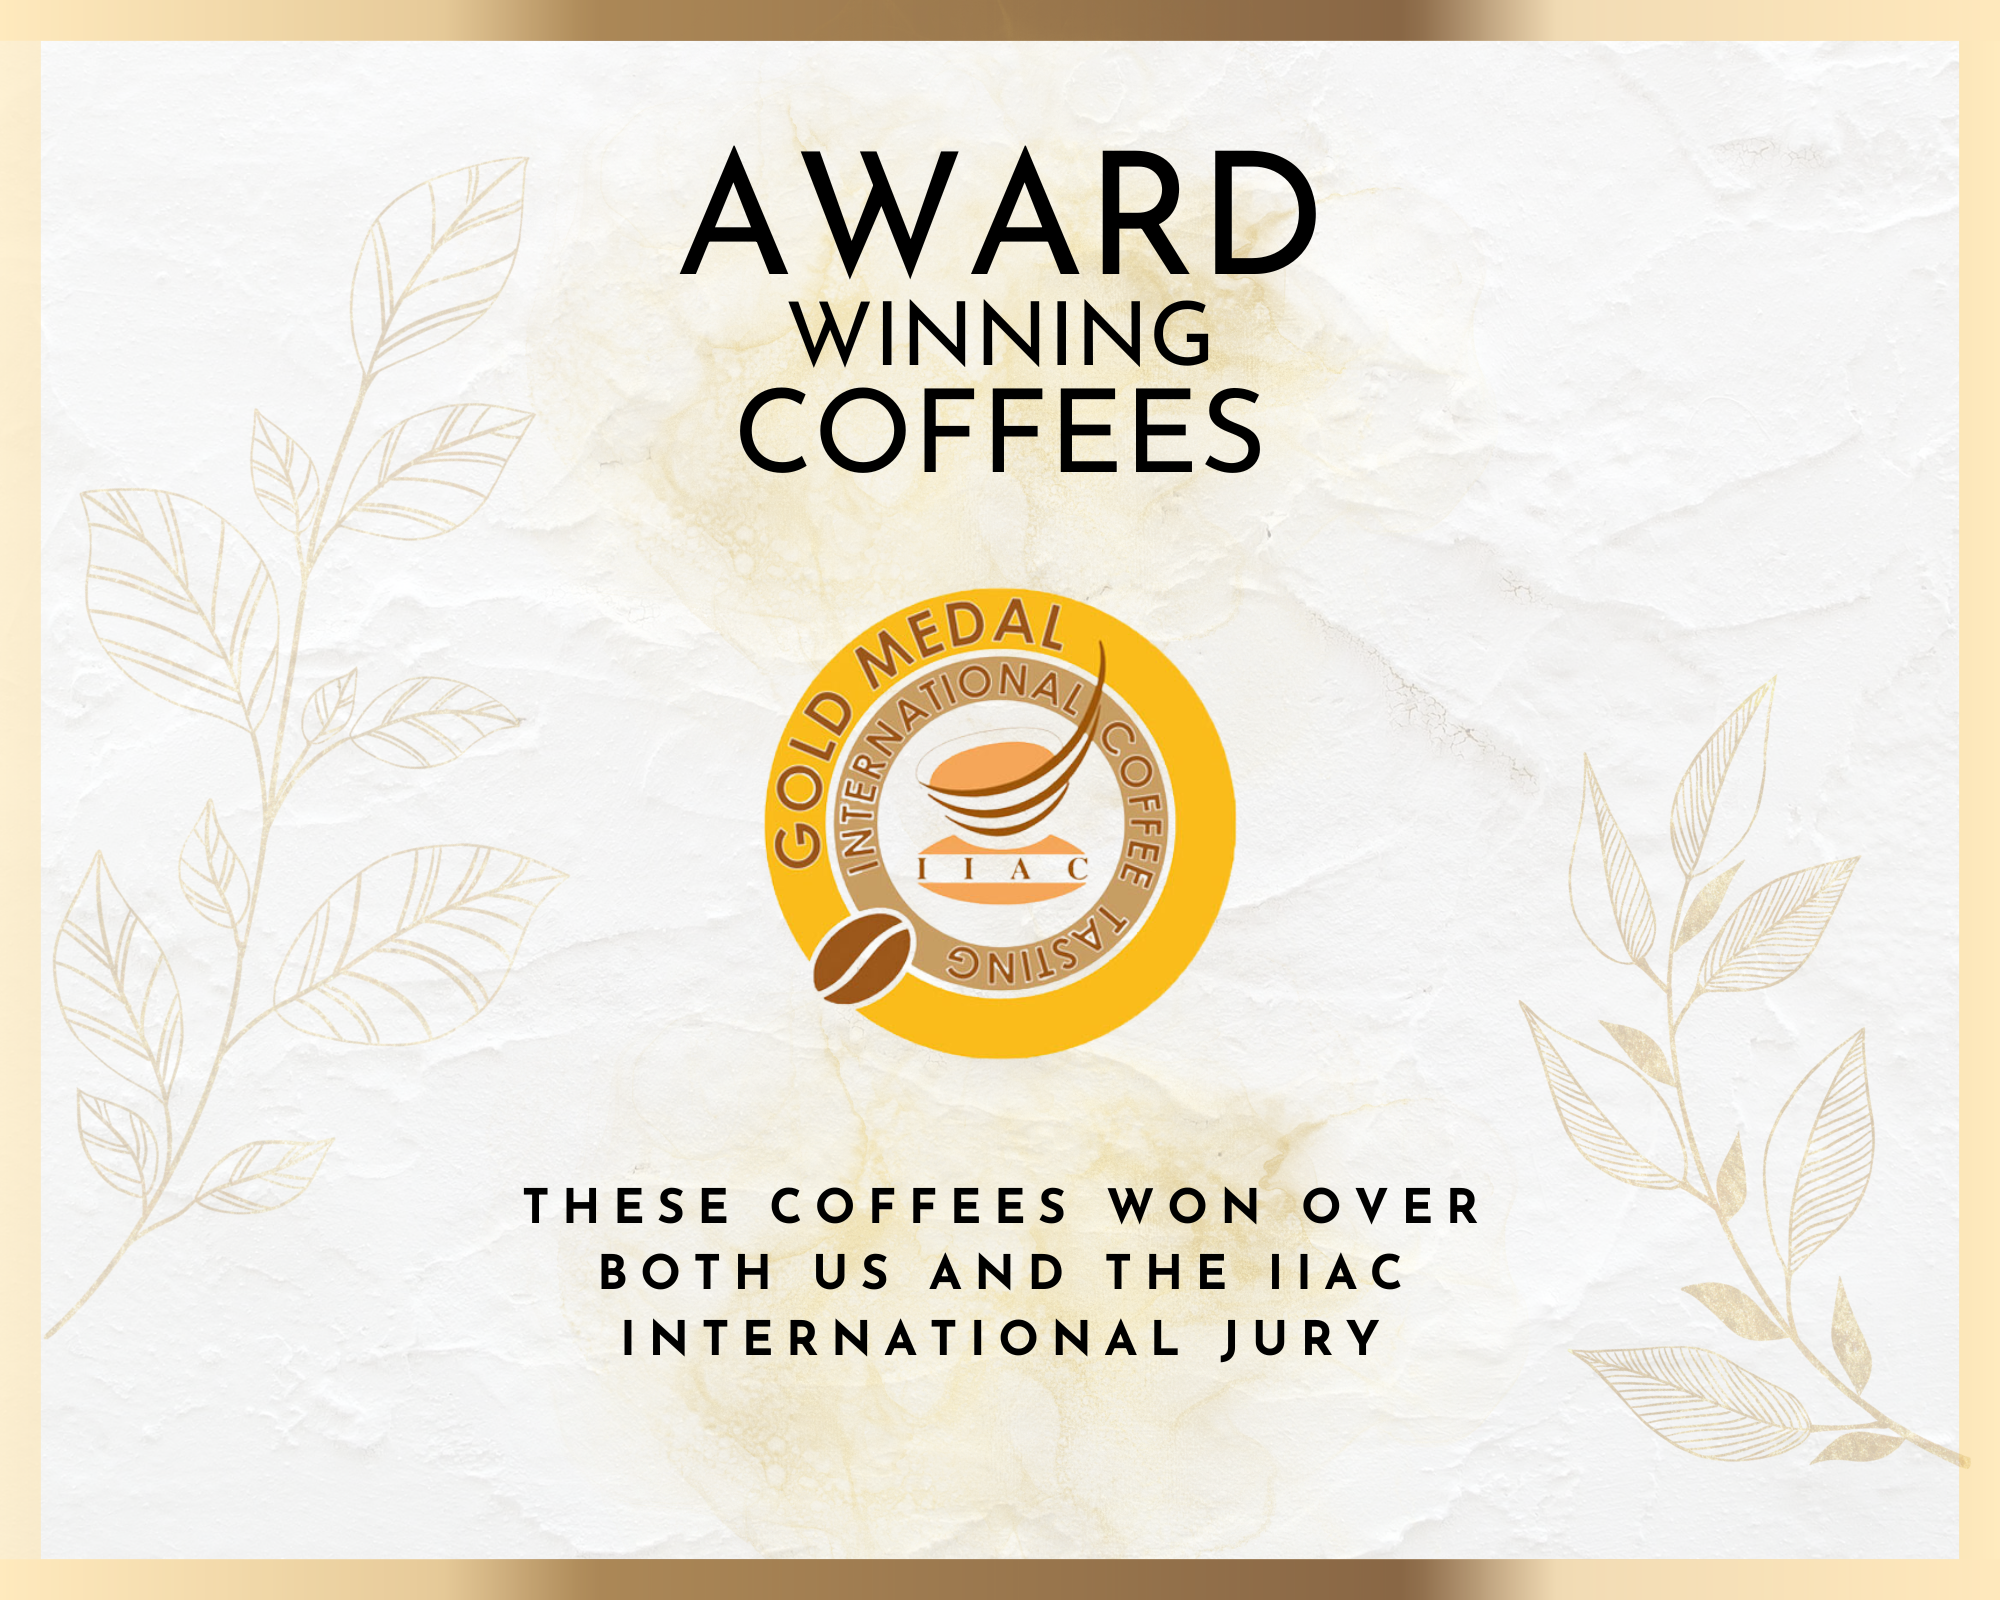 Award-winning coffees